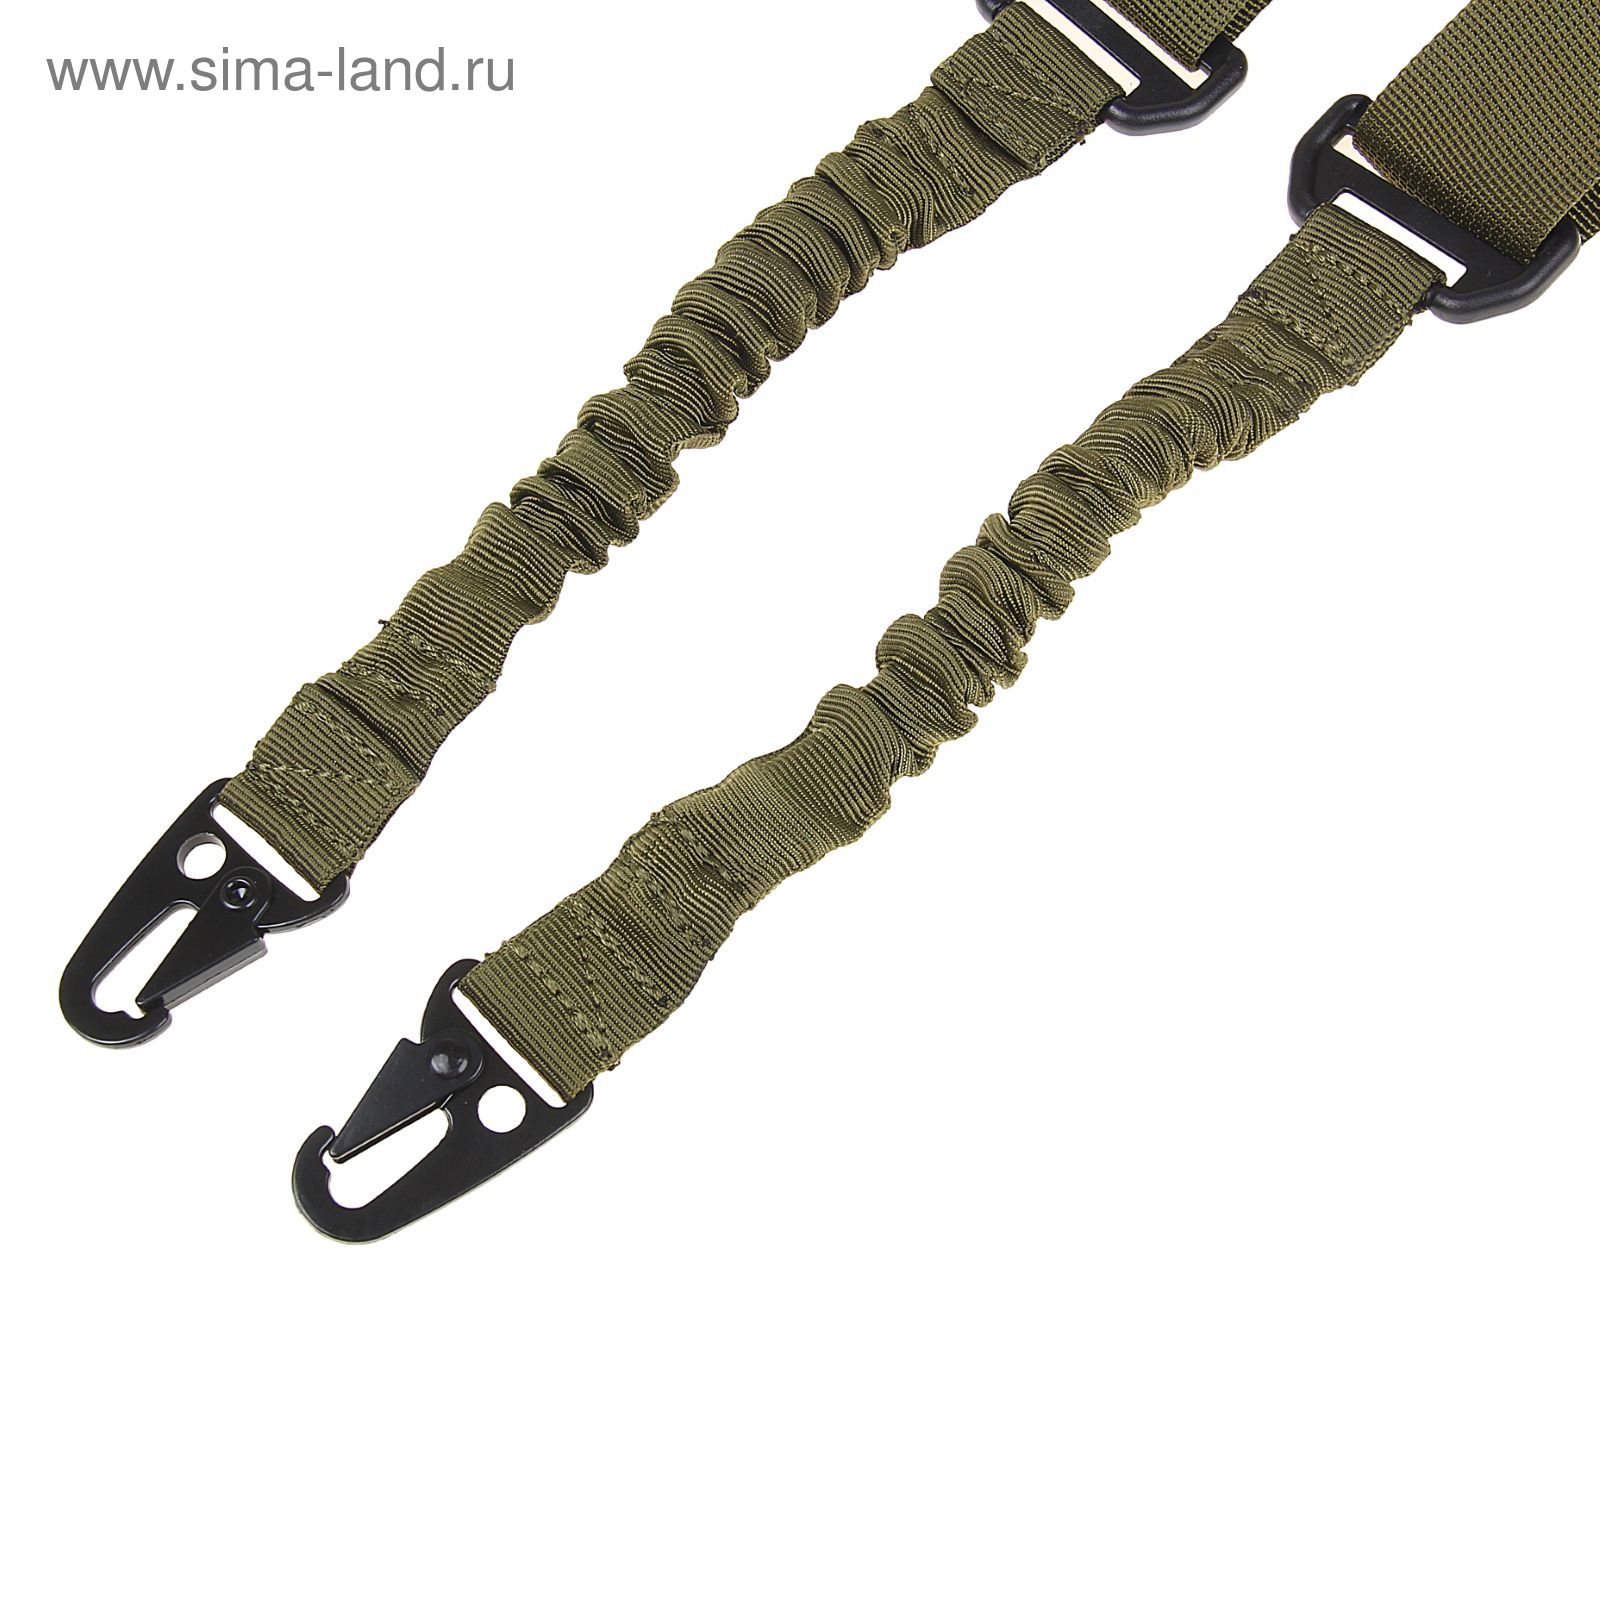 Ремень оружейный KINGRIN two point sling (OD) SL-08-OD